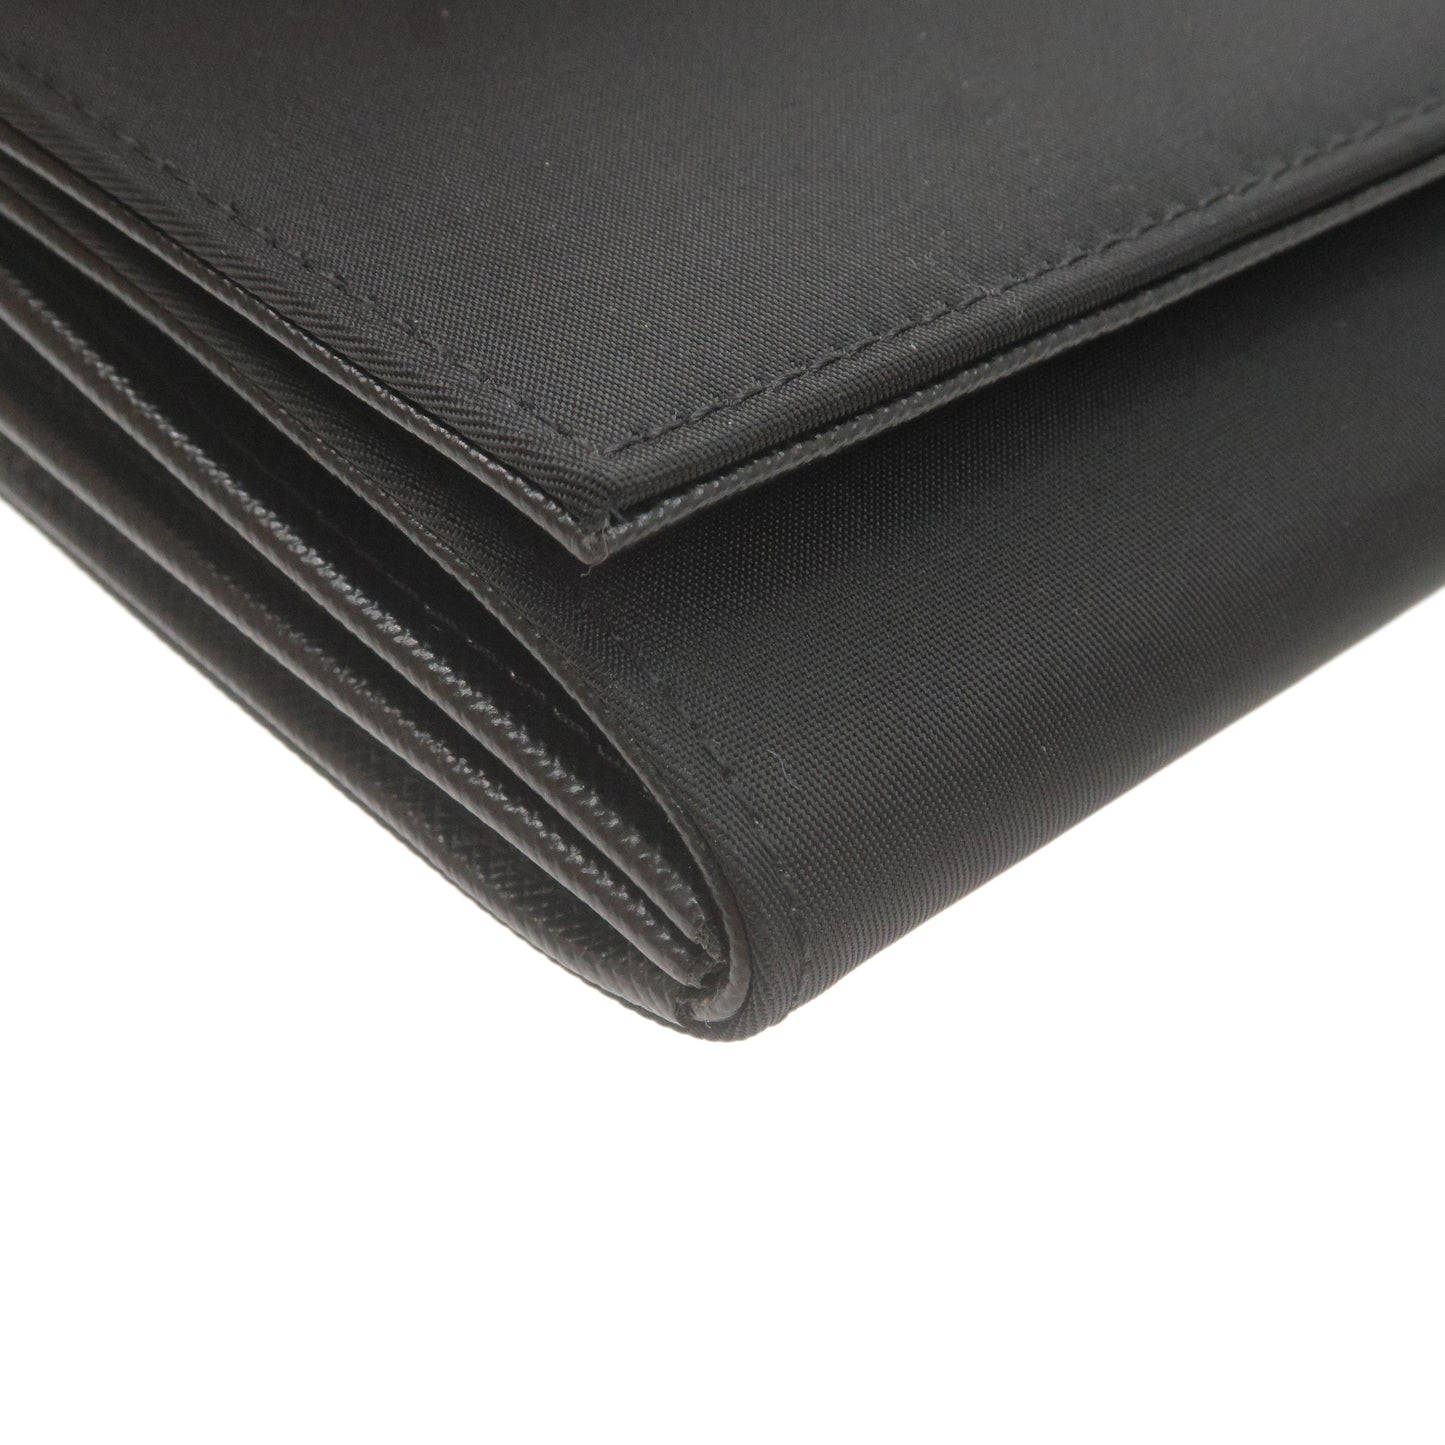 PRADA Logo Nylon Bi-FOLD Long Wallet NERO Black M608